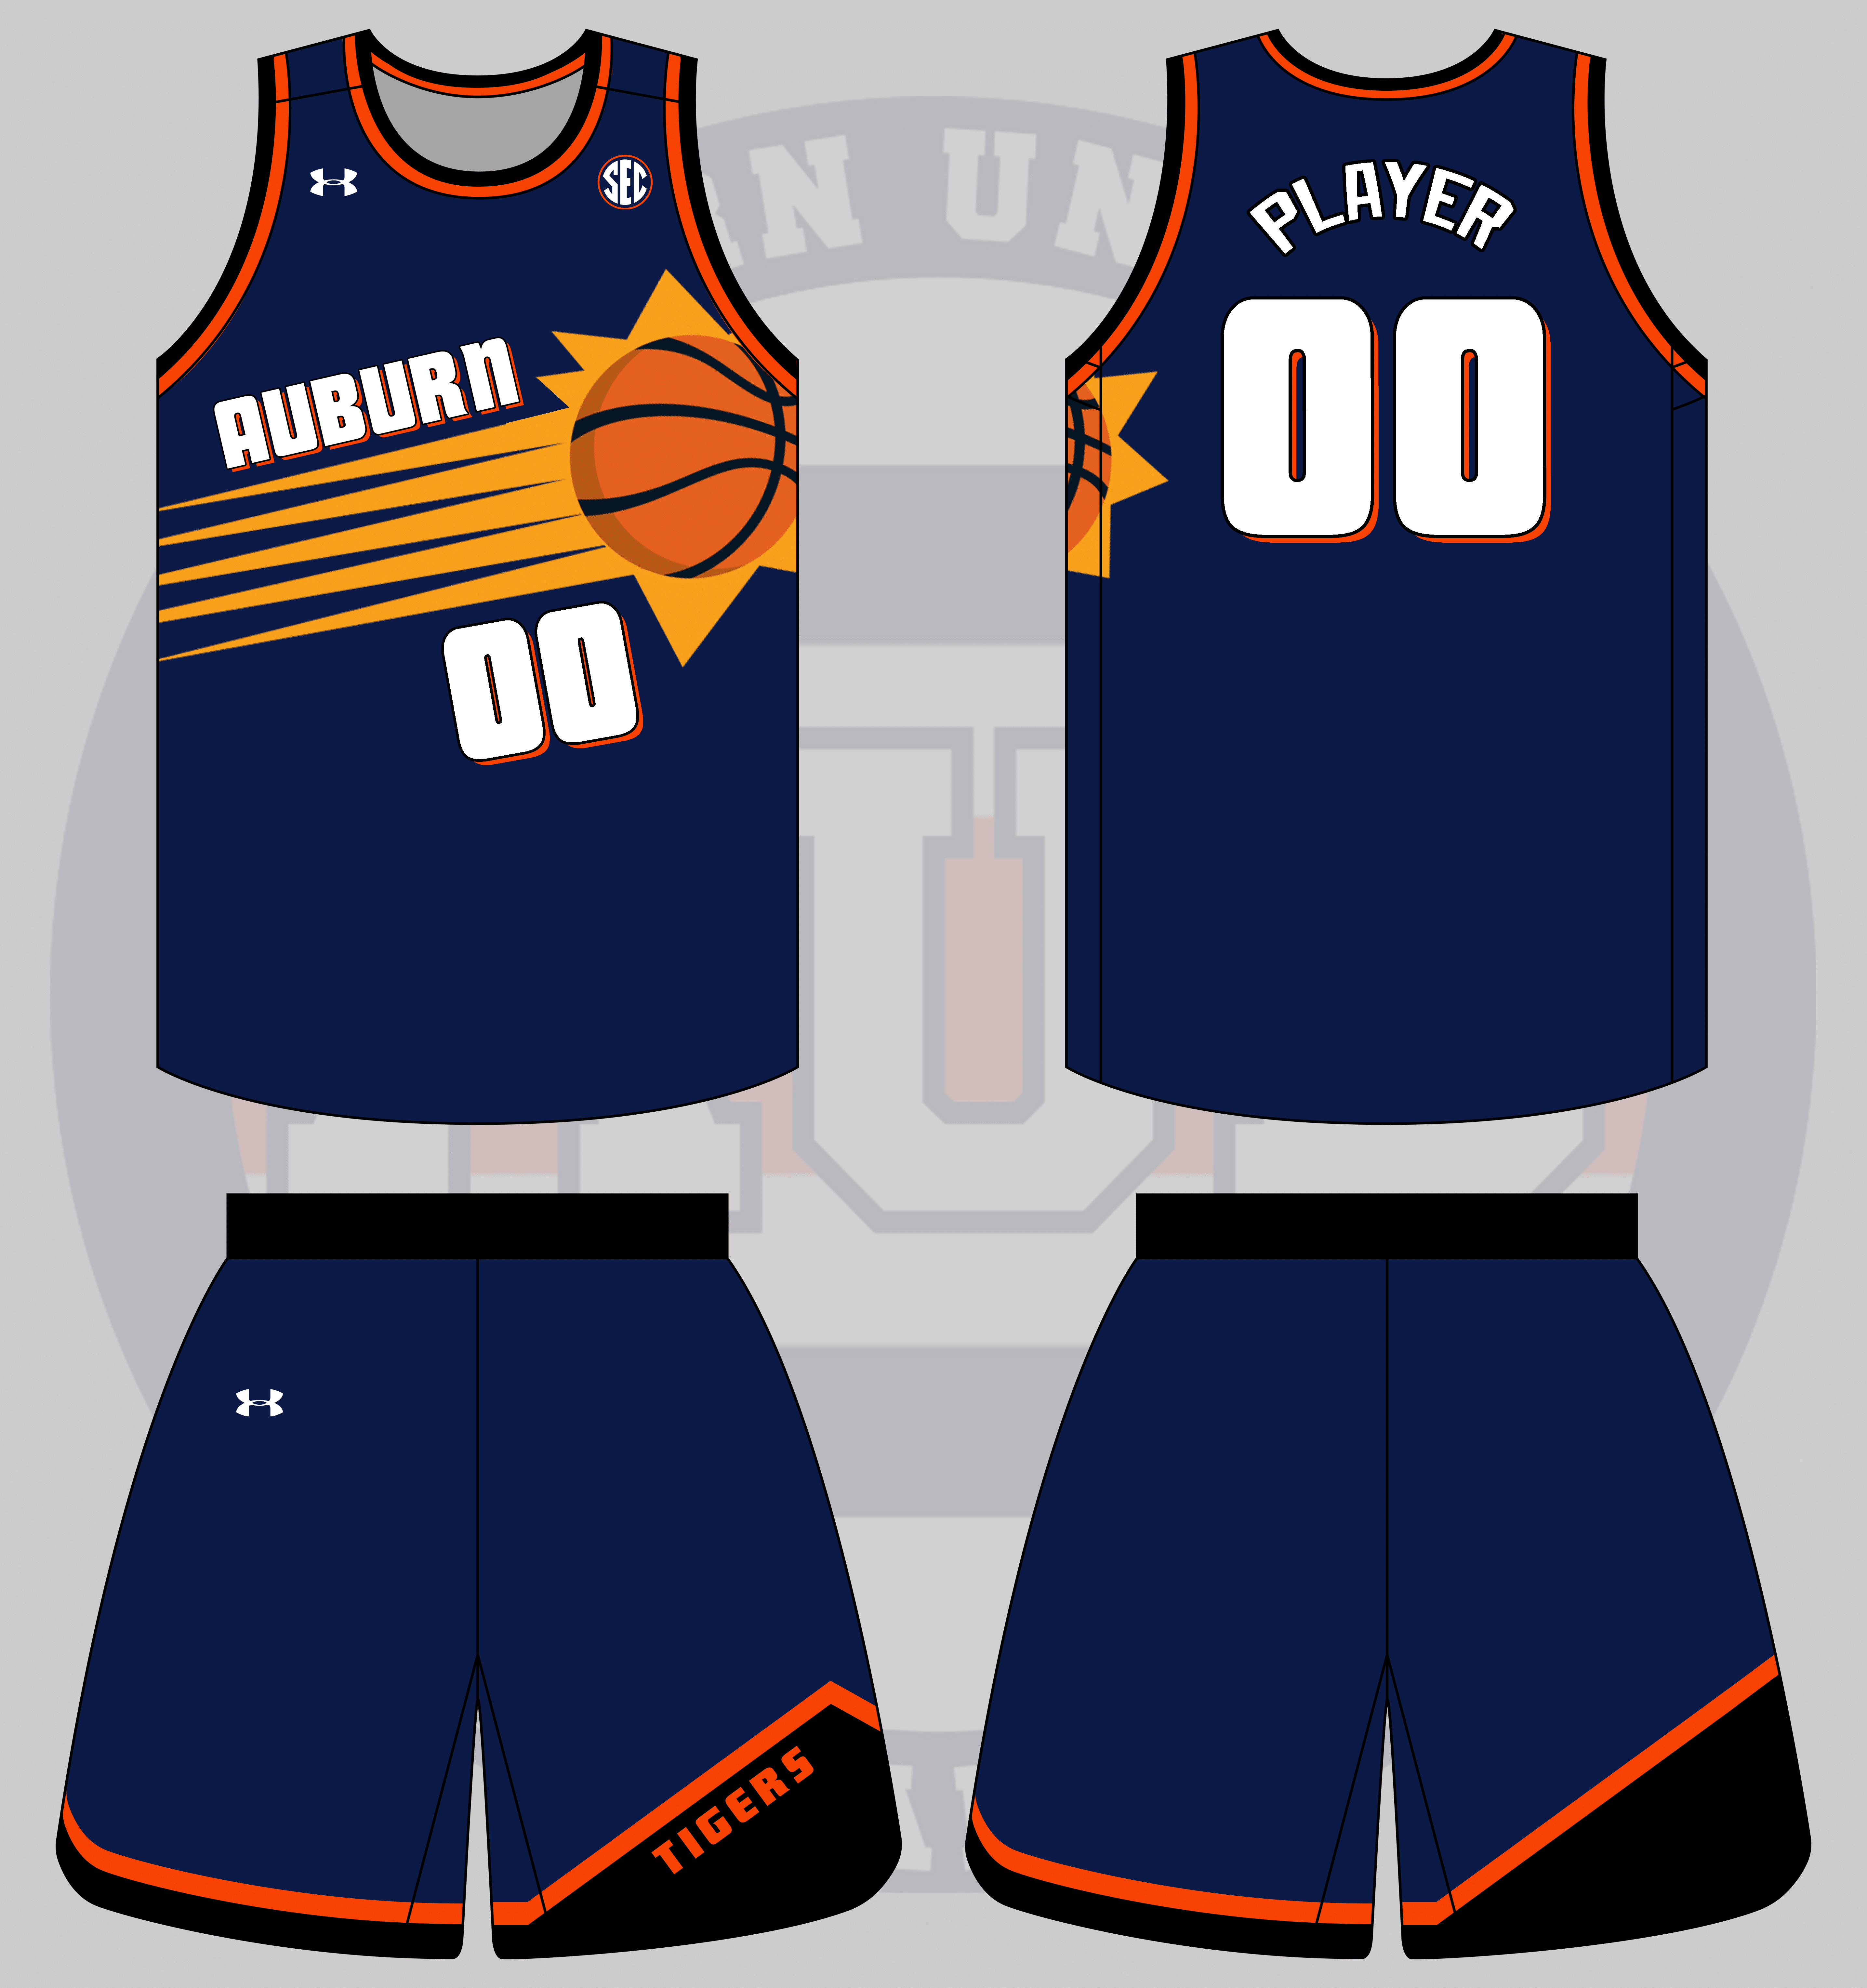 Basketball Uniform Tiger style